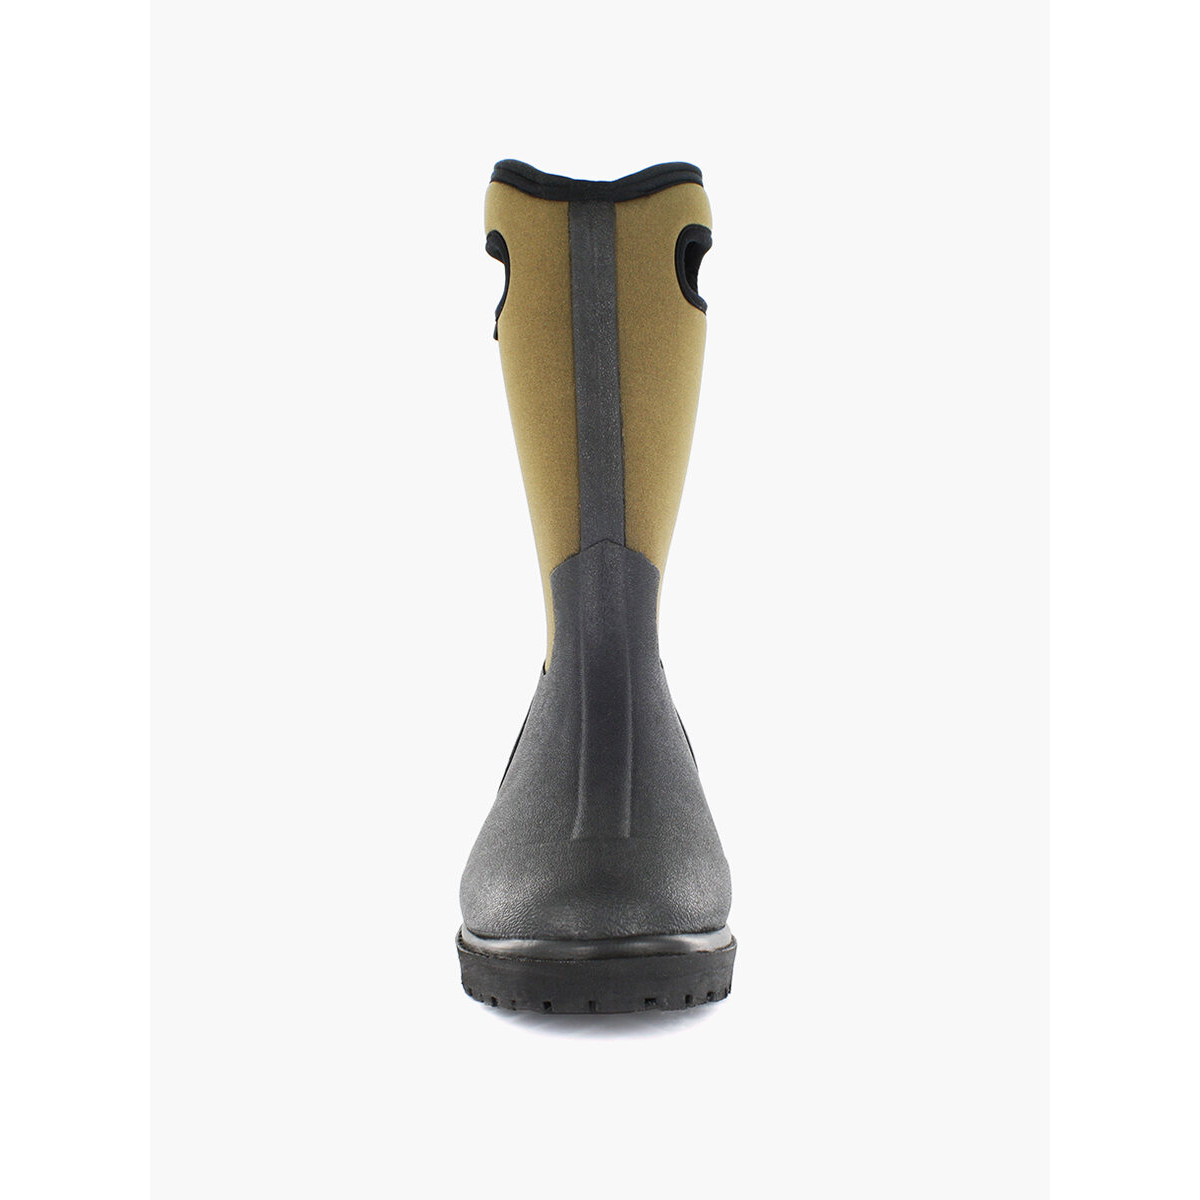 BOGS Men's Roper Insulated Waterproof Soft Toe Work Boots Black & Brown - 69162-963 - BLACK, 15